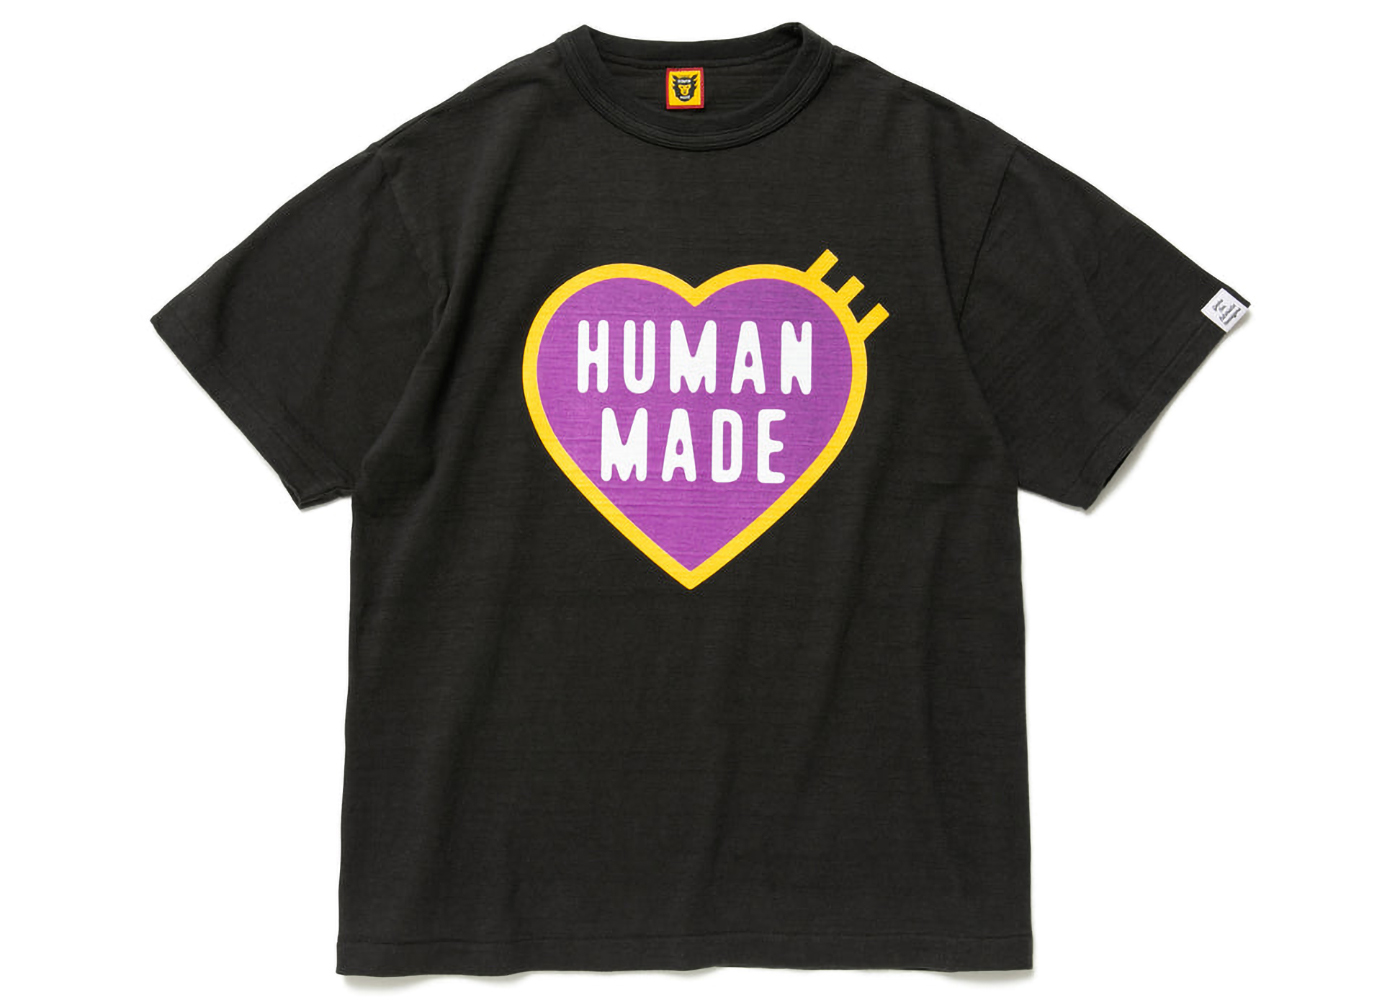 HUMAN MADE Graphic T-Shirt #12 "Black"